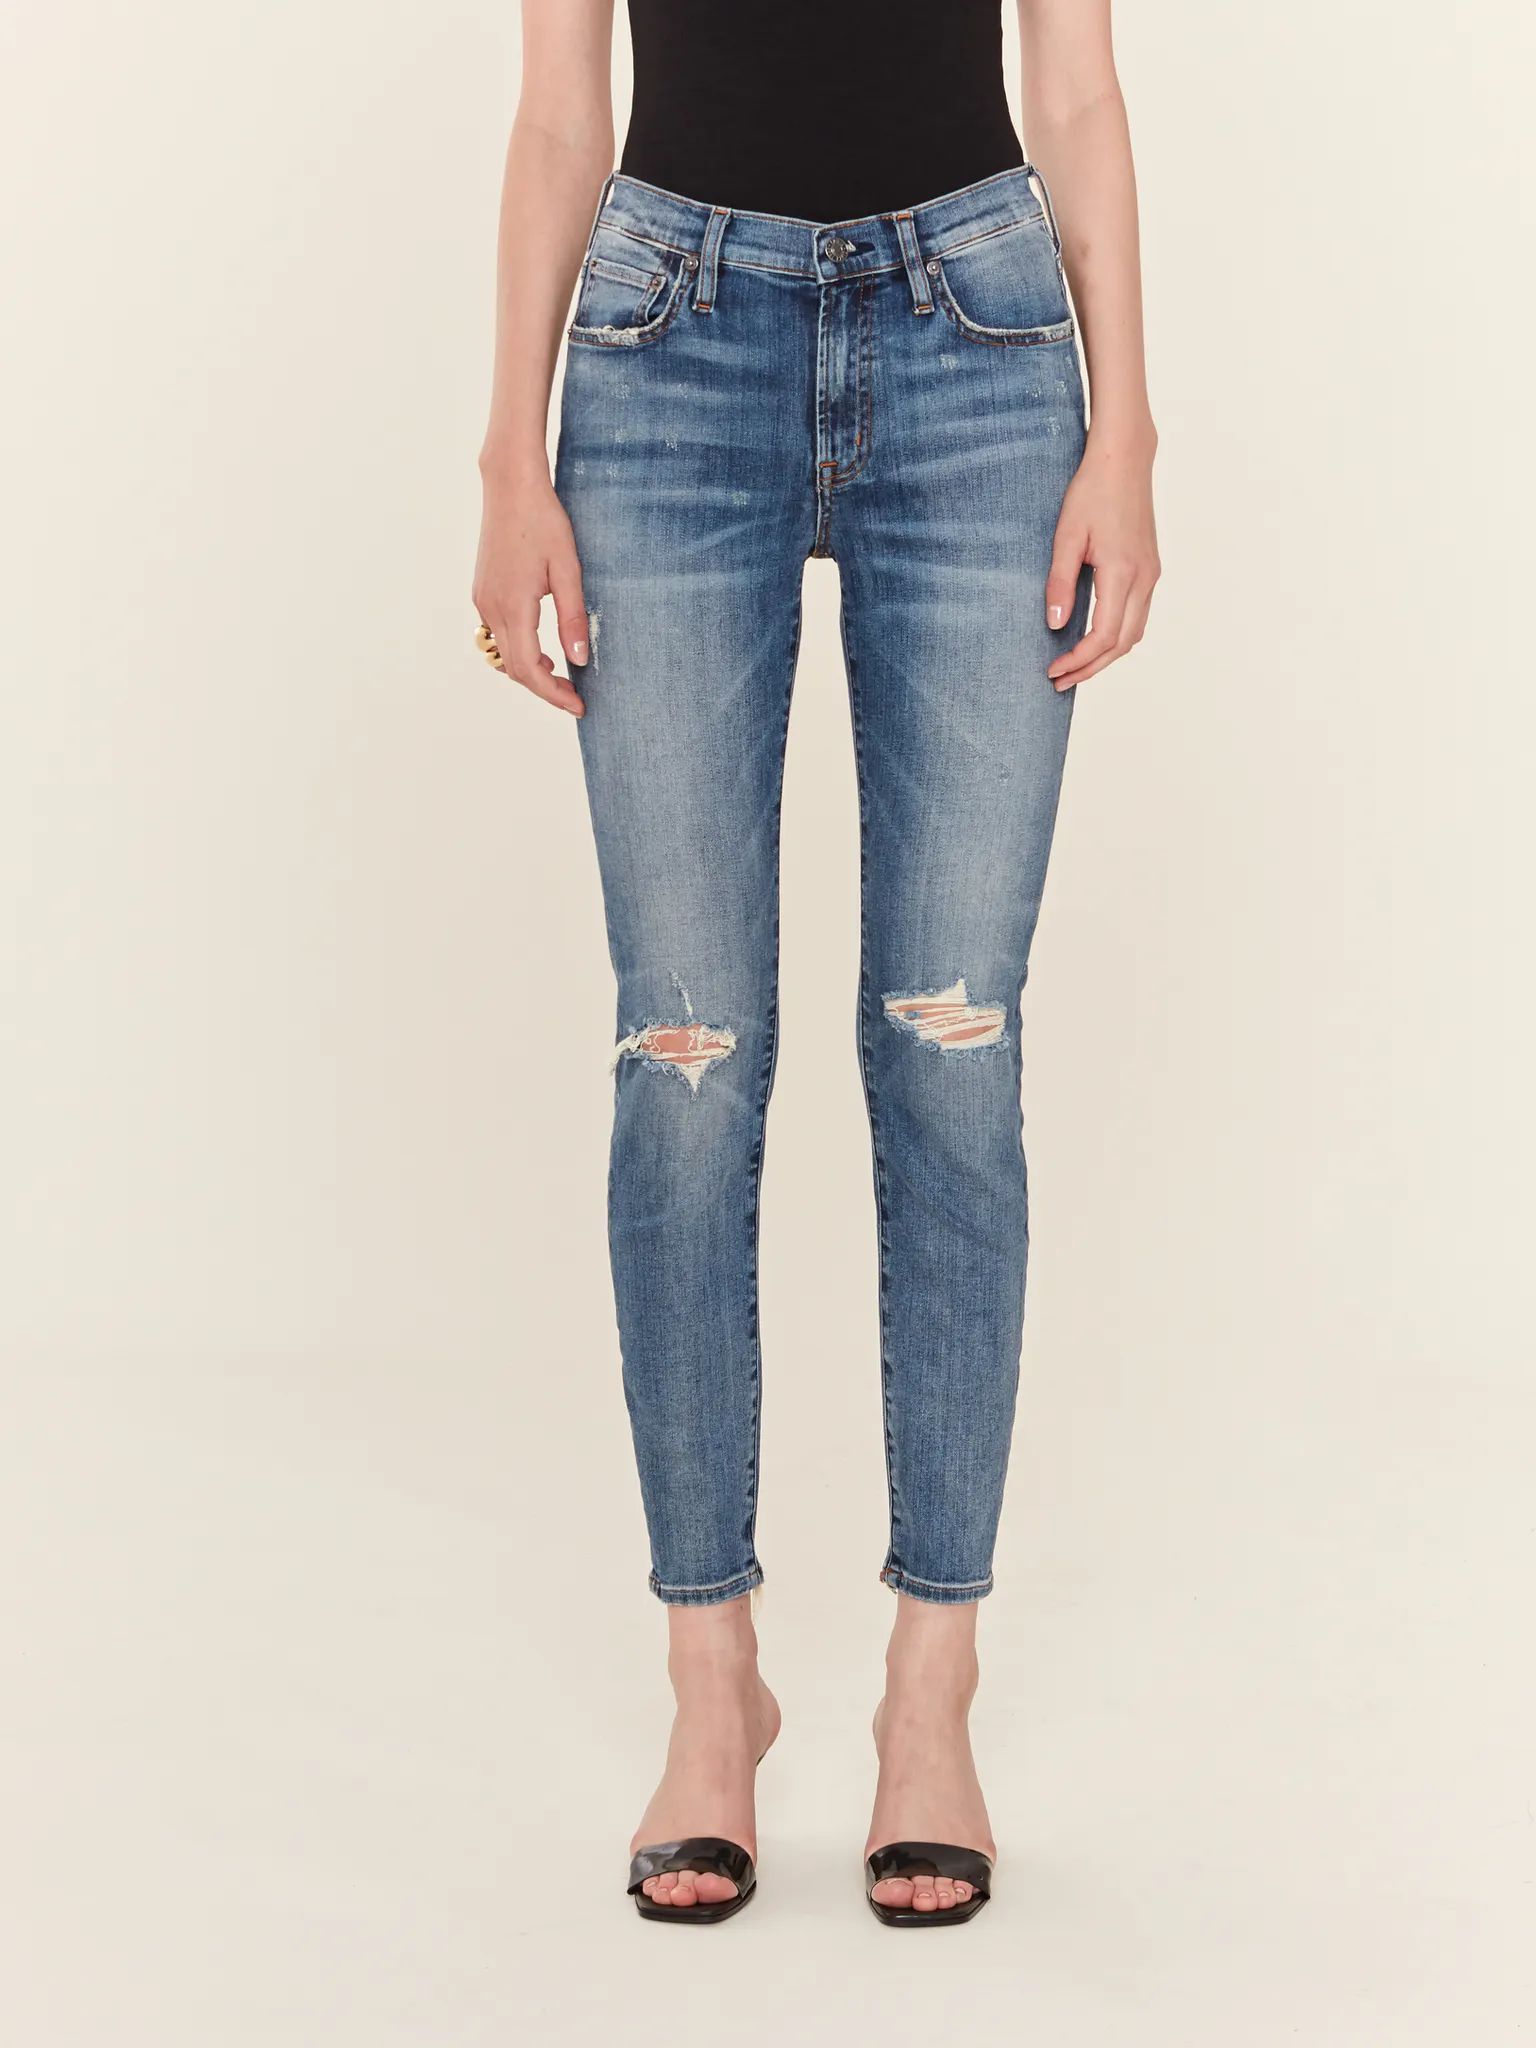 Pixie Deconstructed Skinny Jeans | Verishop